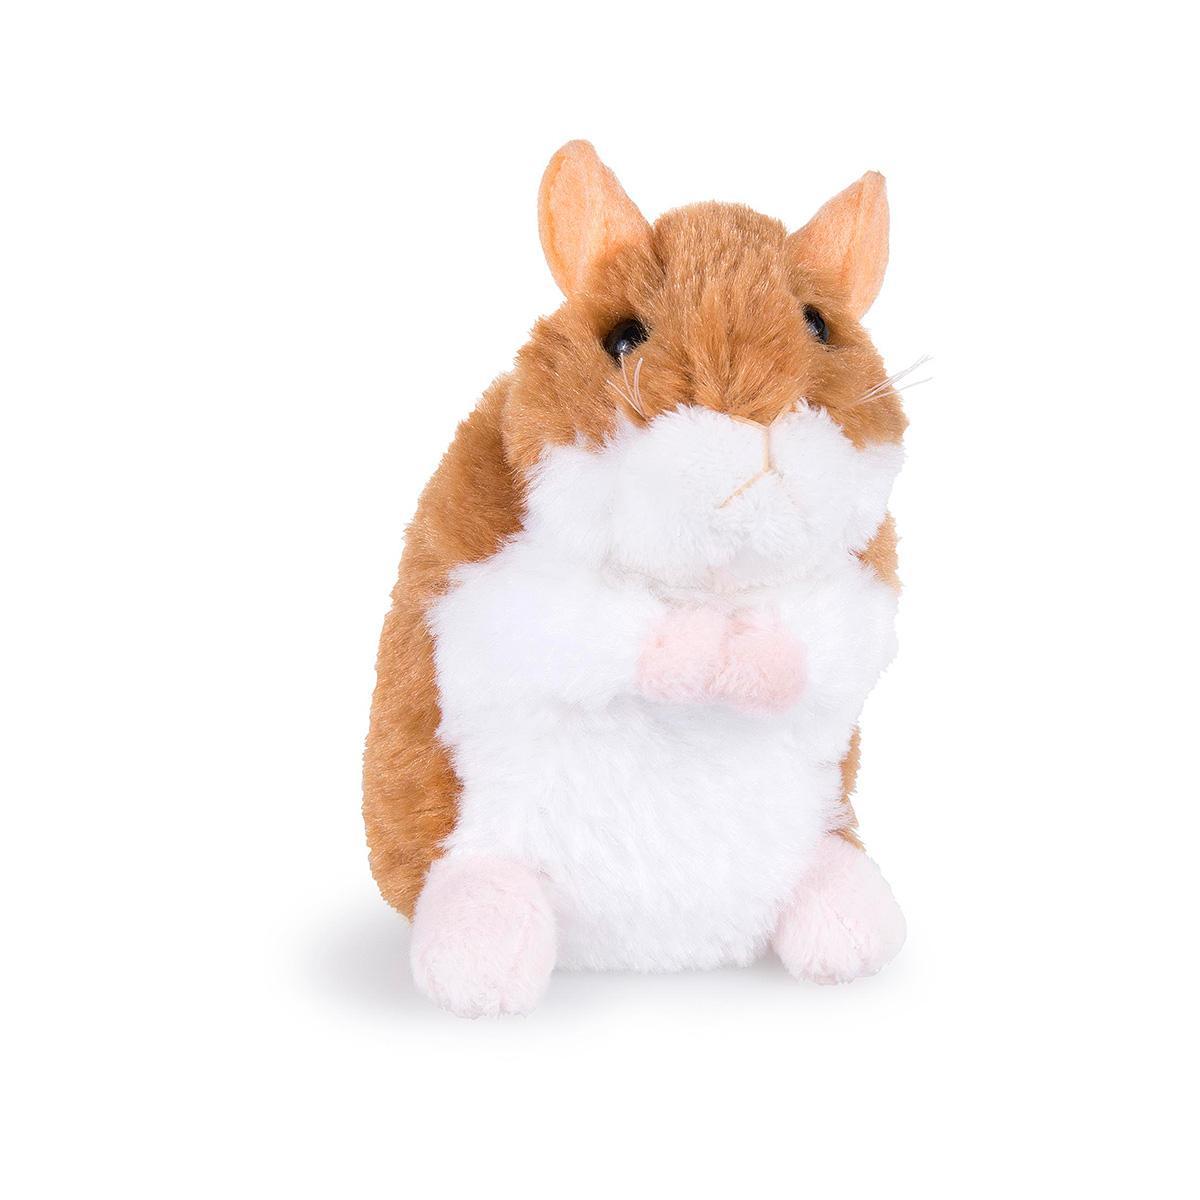 stuffed hamster